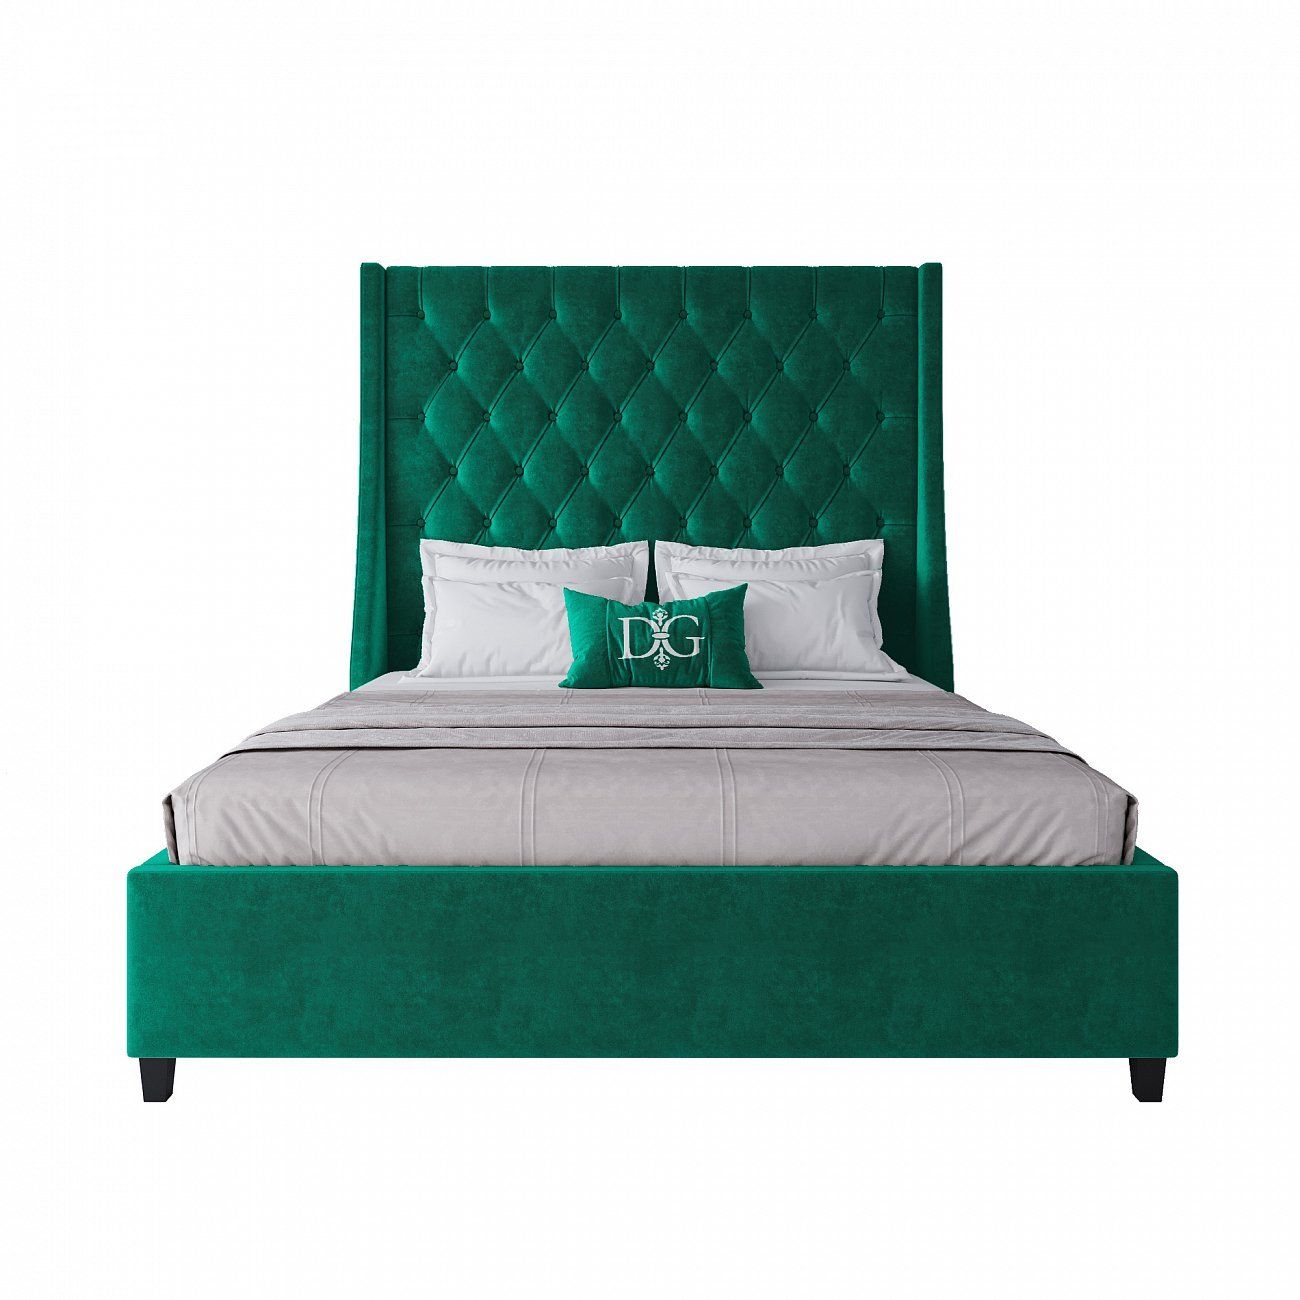 Double bed 160x200 green velour Ada